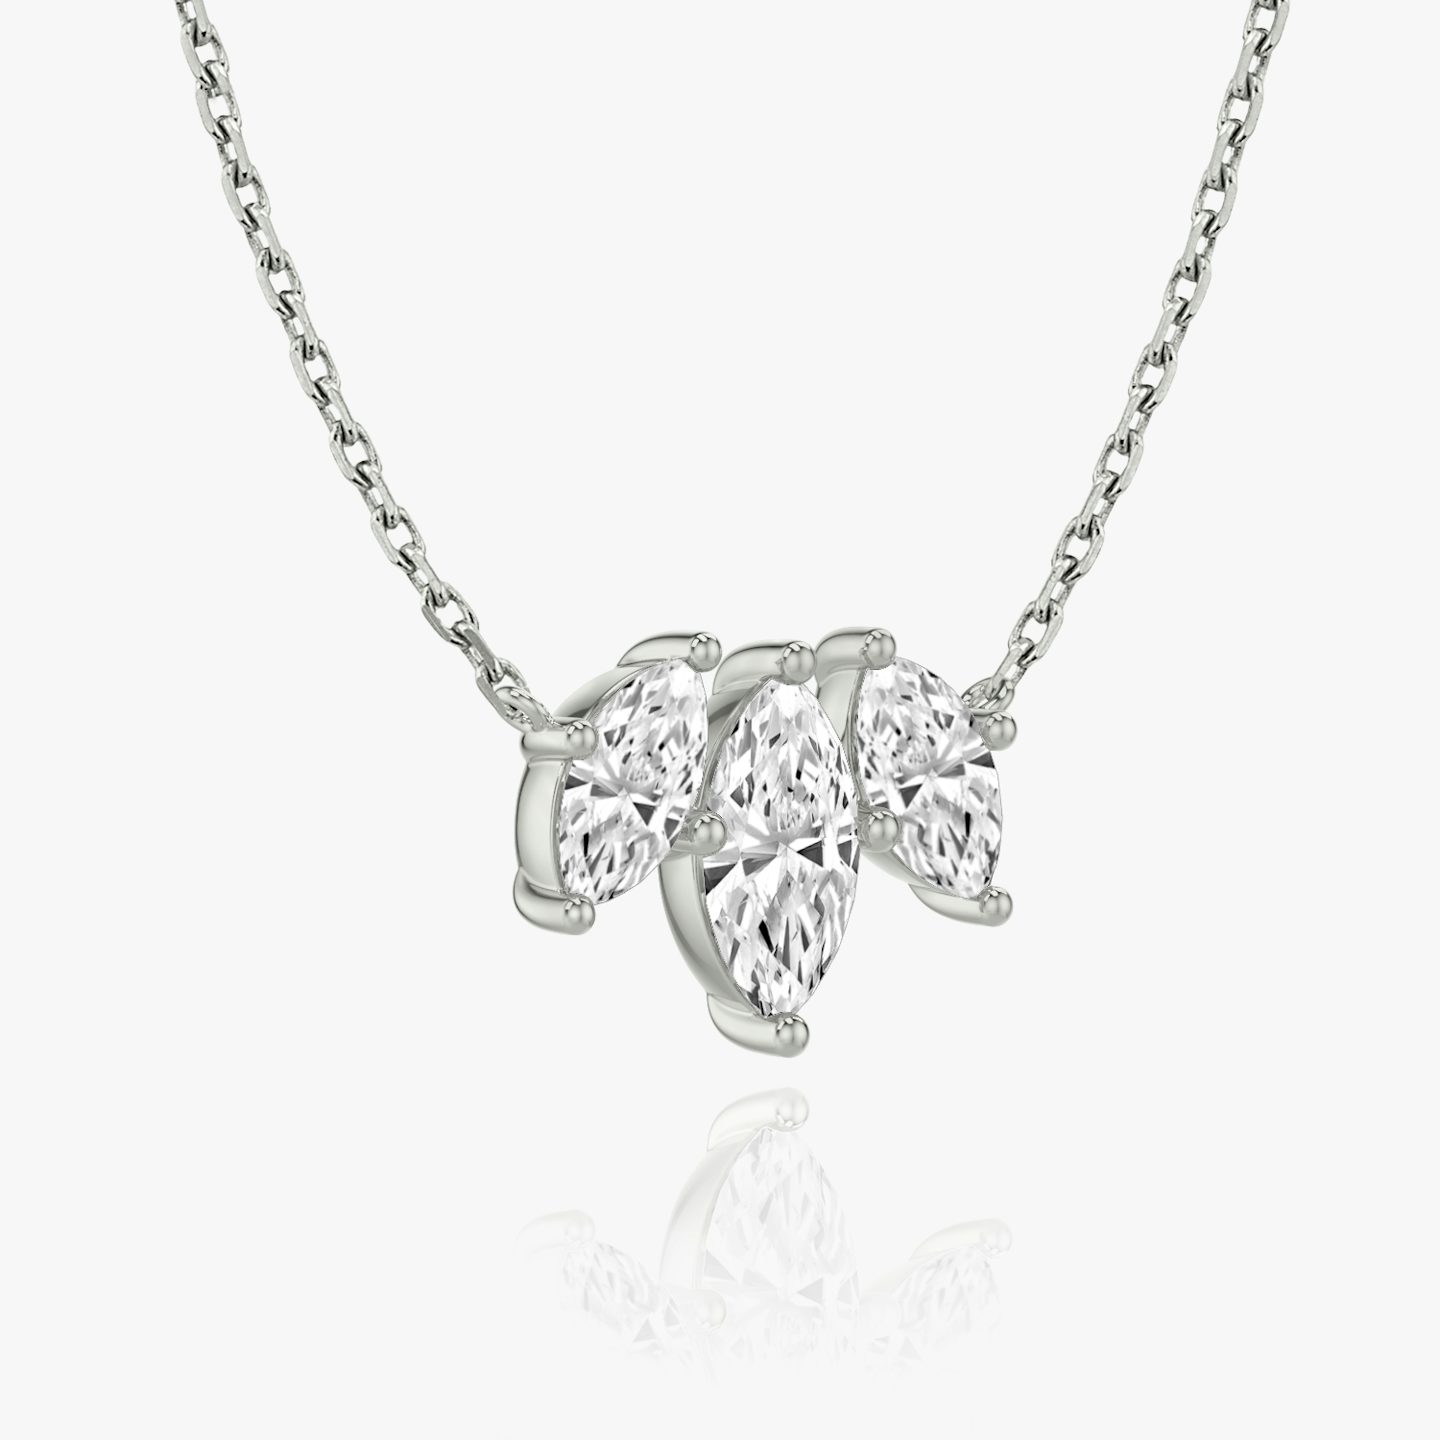 Arc Necklace | Marquise | 14k | White Gold | diamondCount: 3 | diamondSize: large | chainLength: 16-18